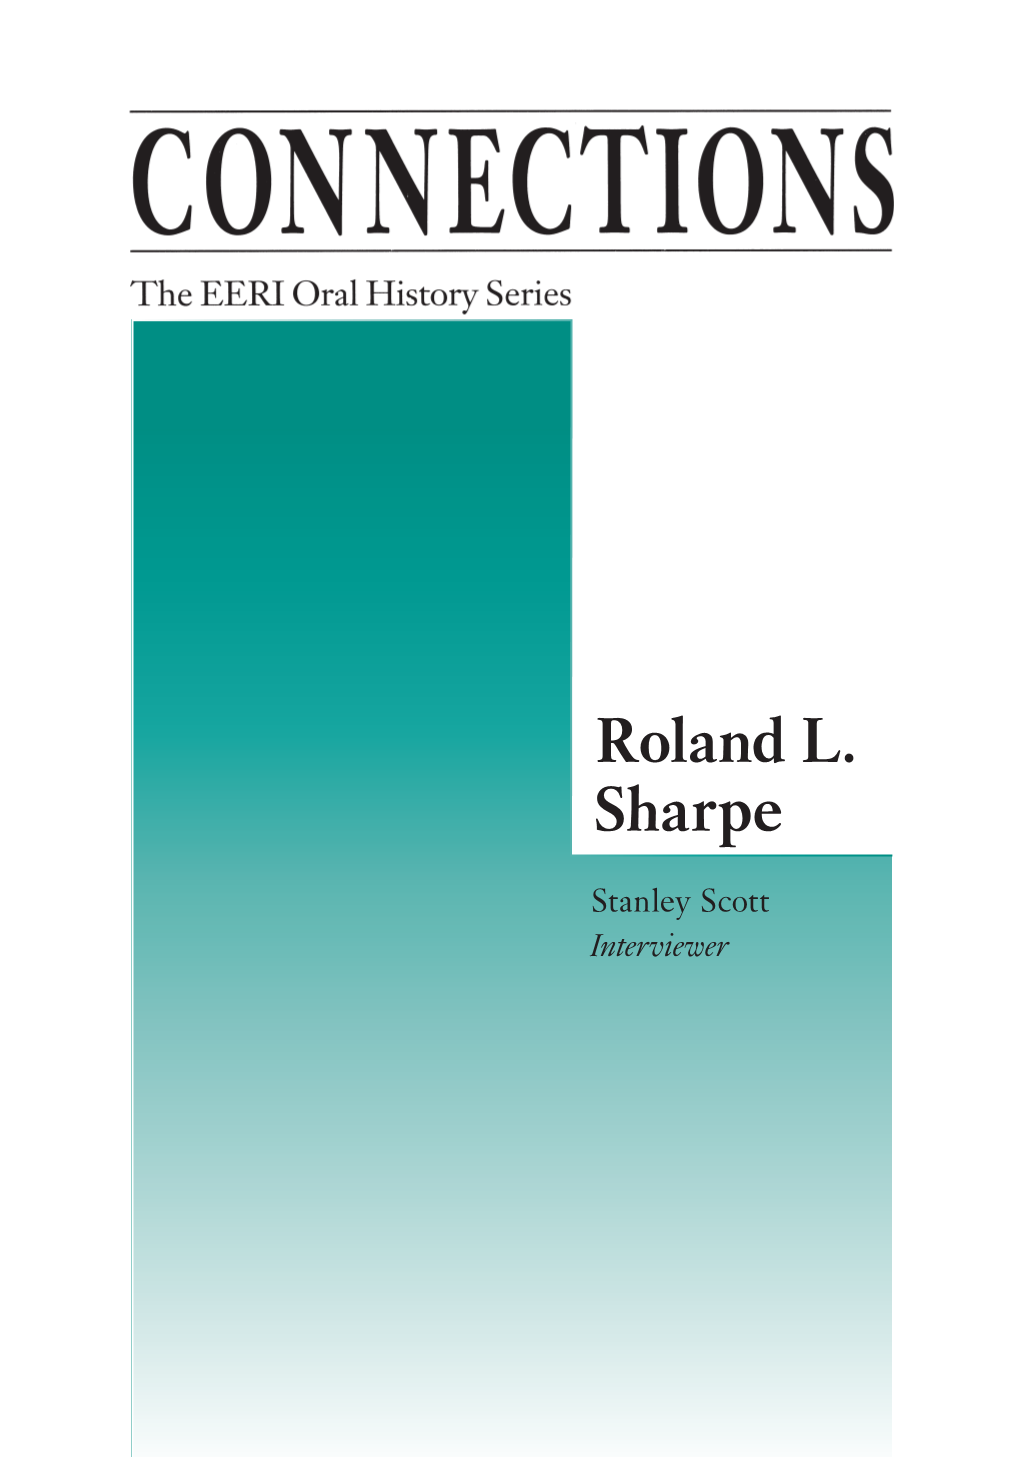 Roland L. Sharpe